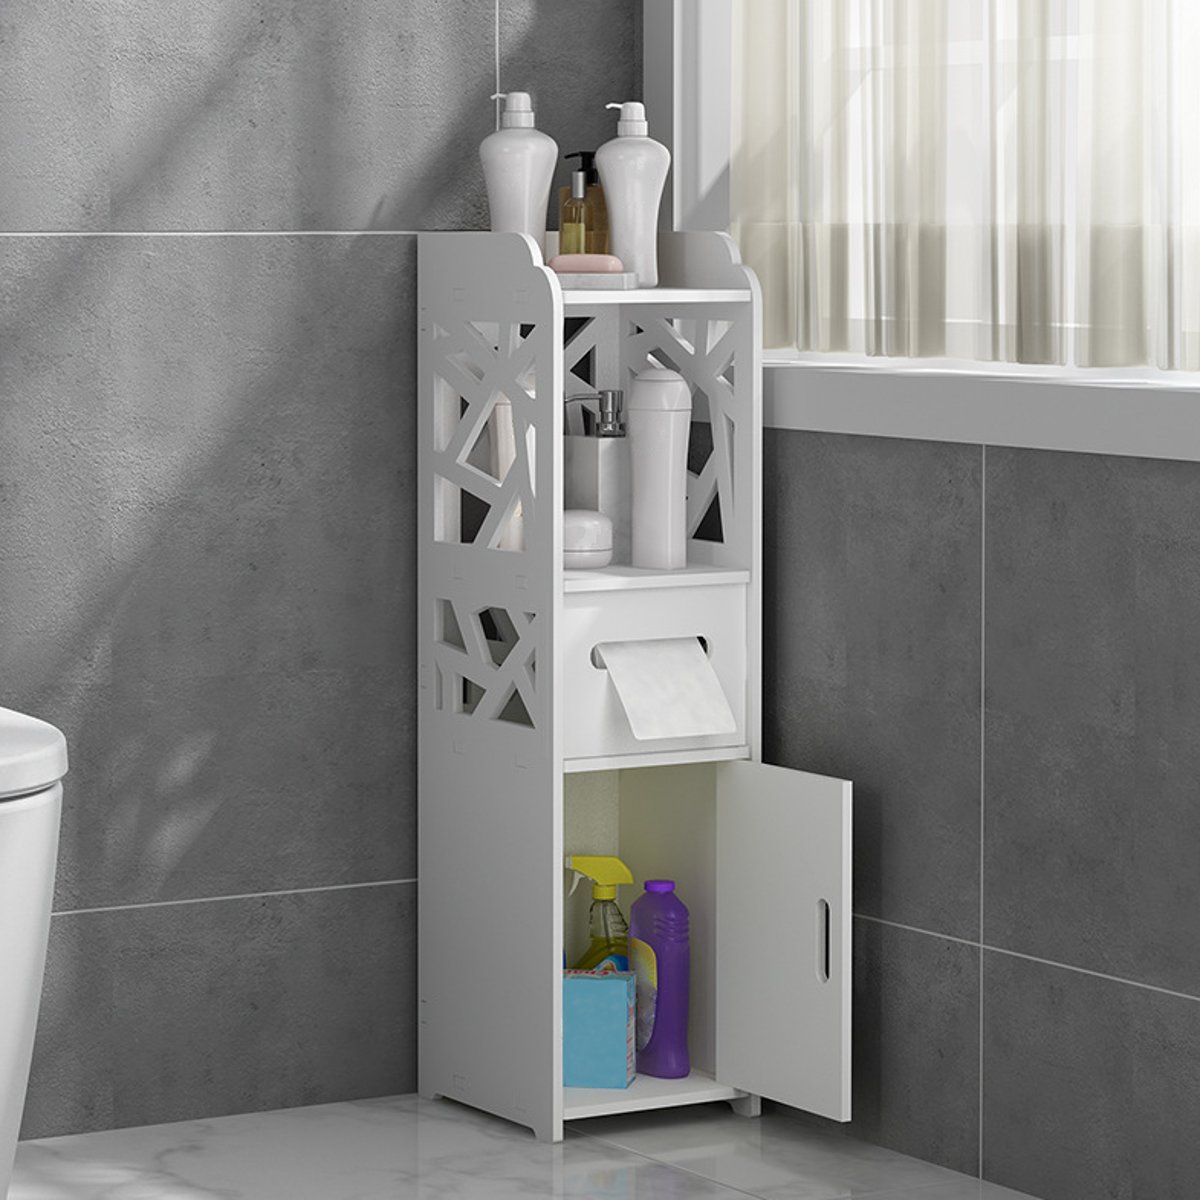 Find 22x24x80cm Bathroom Floor Standing Storage Cabinet Washbasin Shower Corner Shelf for Sale on Gipsybee.com with cryptocurrencies